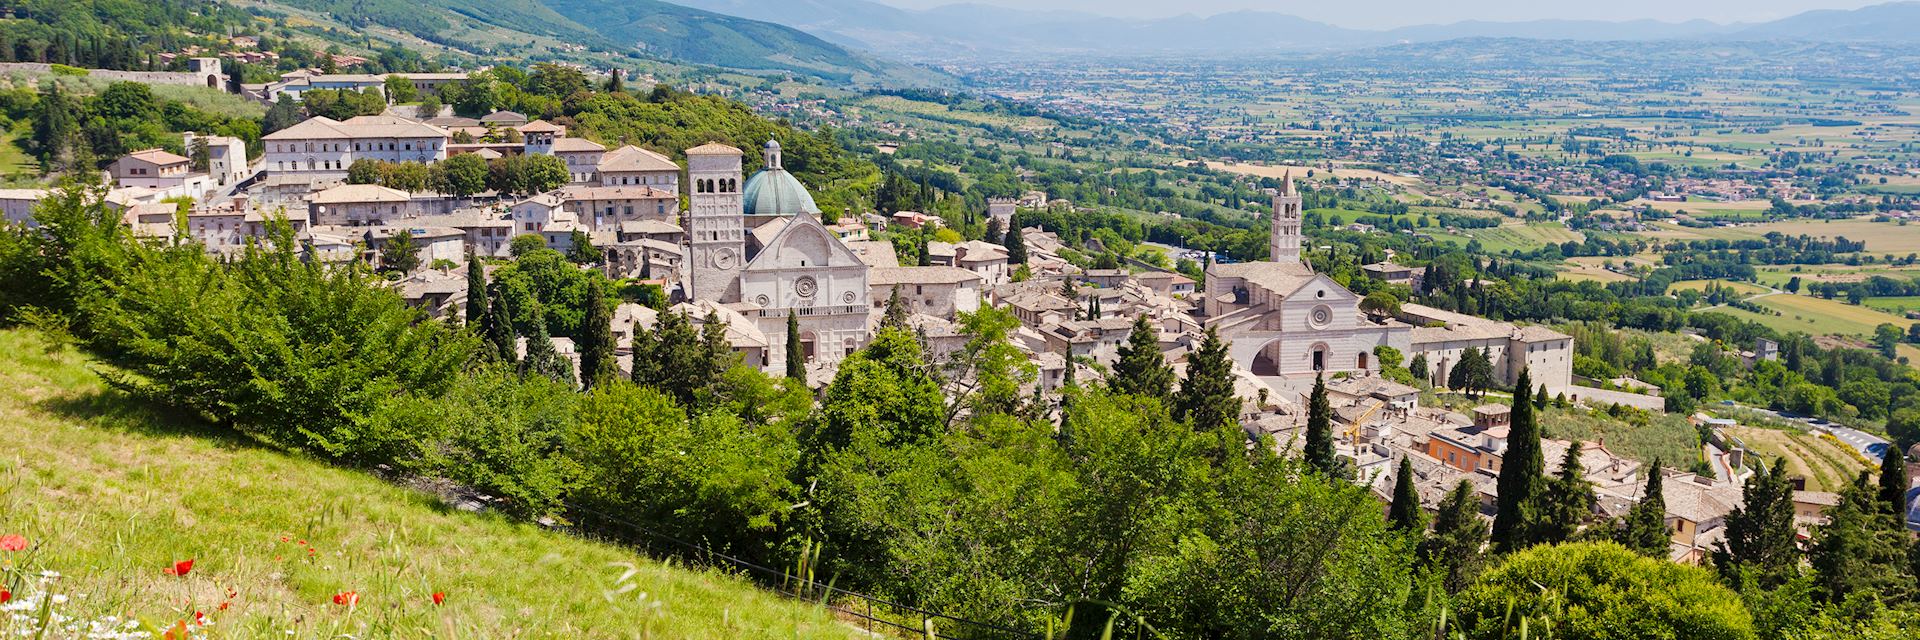 Views over Assisi, Umbria